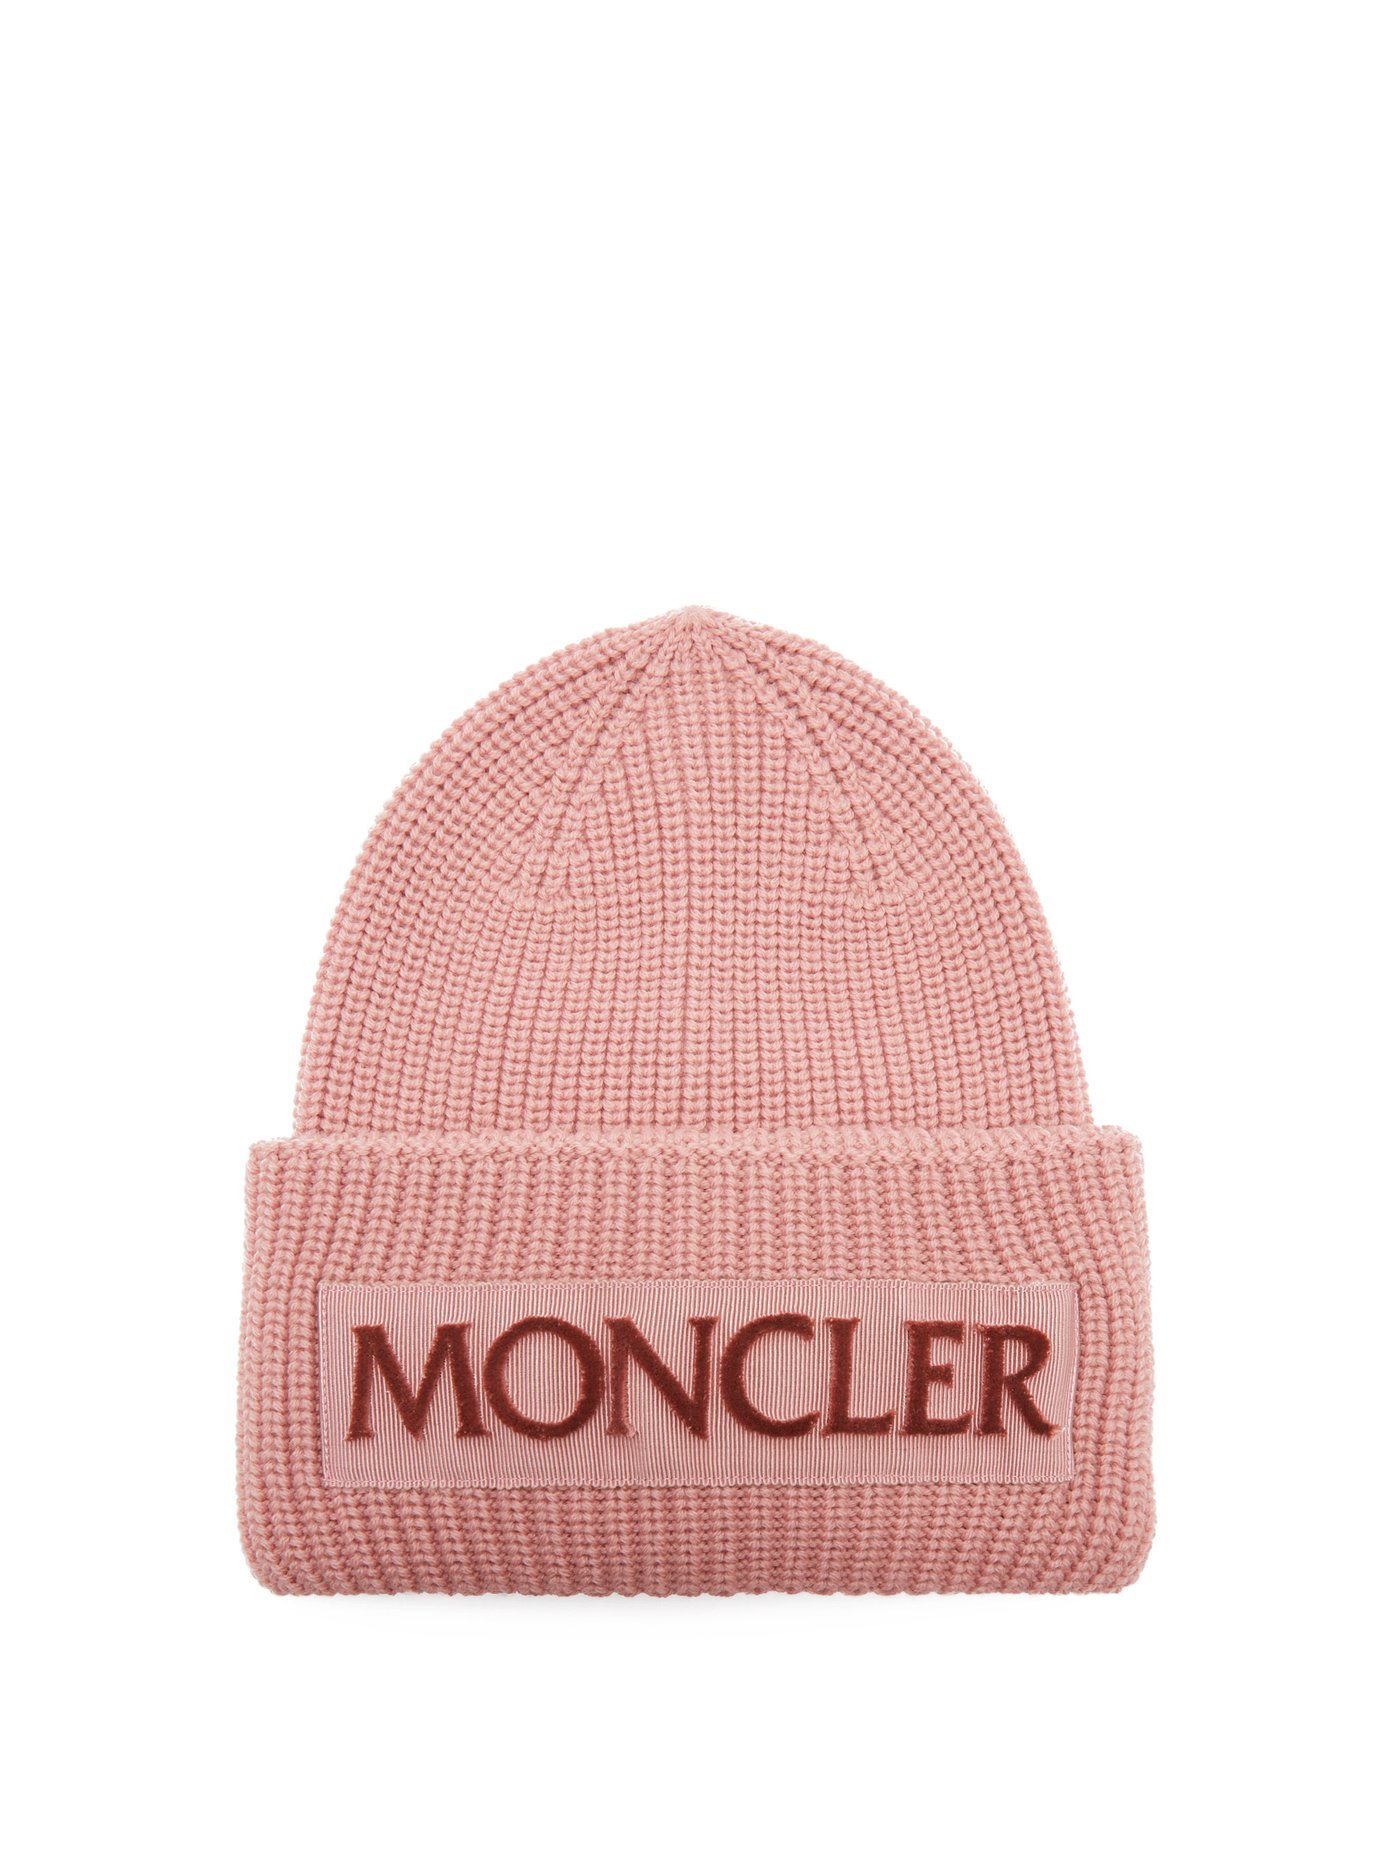 moncler beanie pink